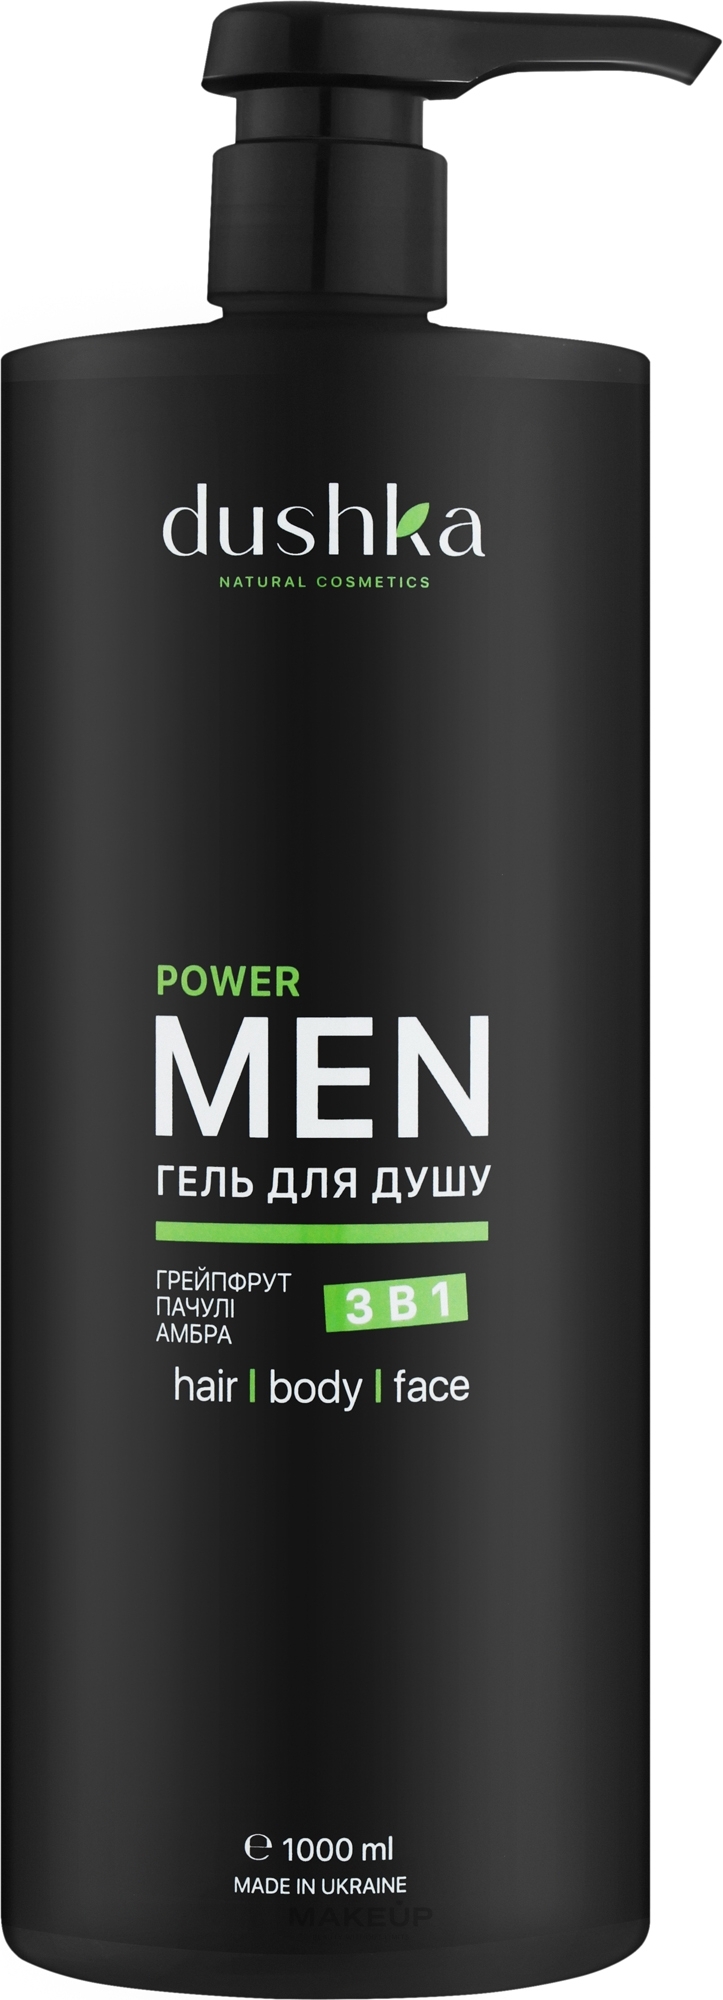 Мужской гель для душа 3 в 1 - Dushka Men Power 3in1 Shower Gel — фото 1000ml